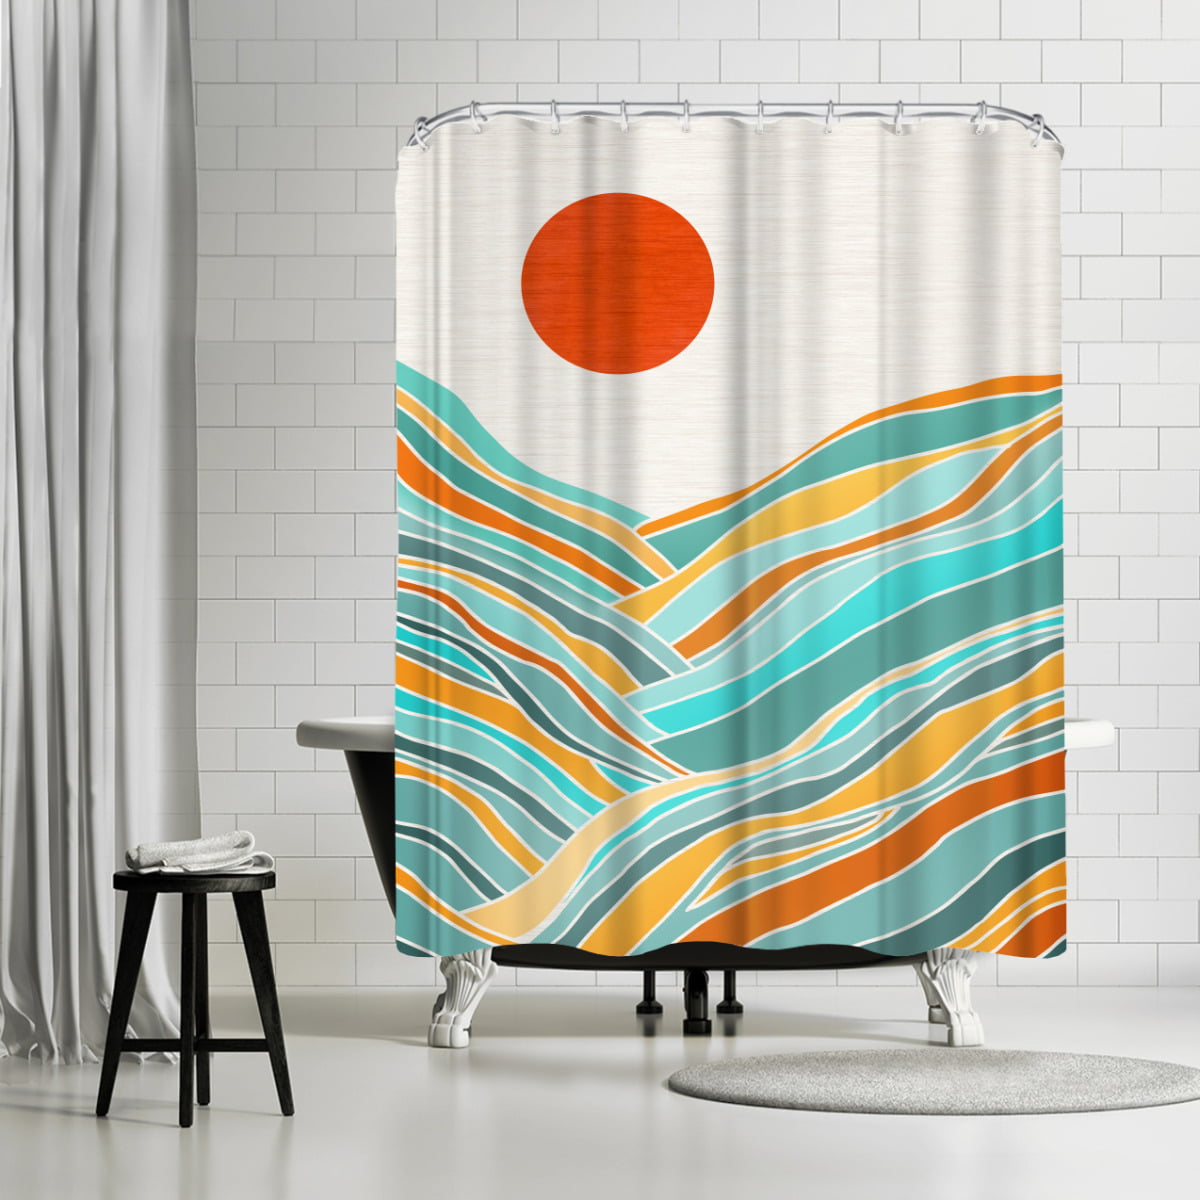 Monochrome Hemp Ropes Shower Curtain Liner Waterproof Fabric & 12 Hooks Bath Mat 